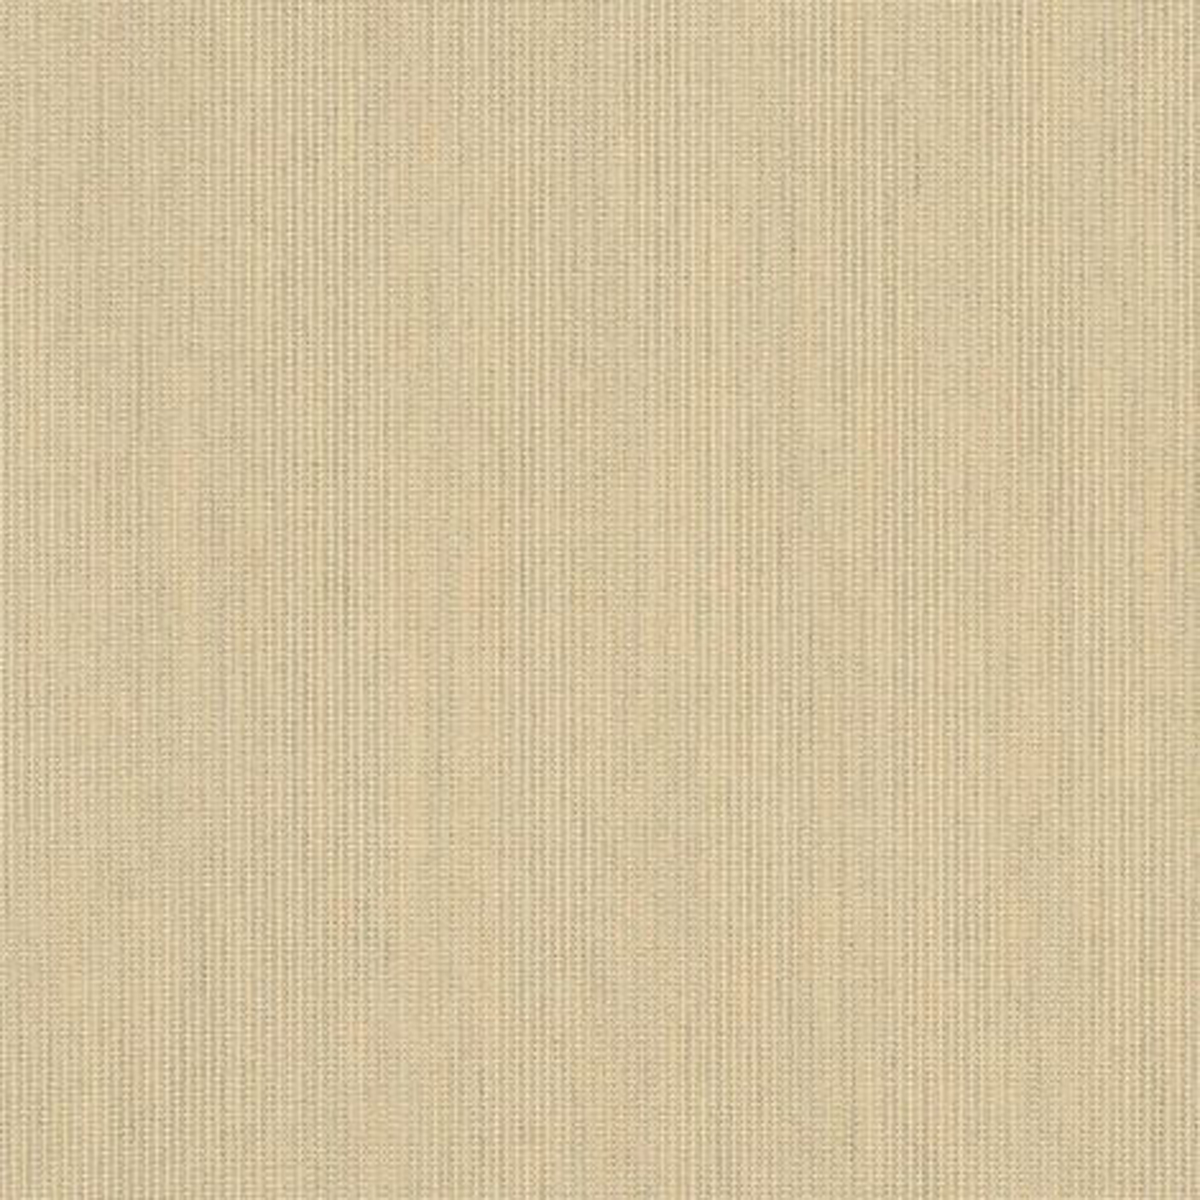 claremont sofa cushion – spectrum sand product image